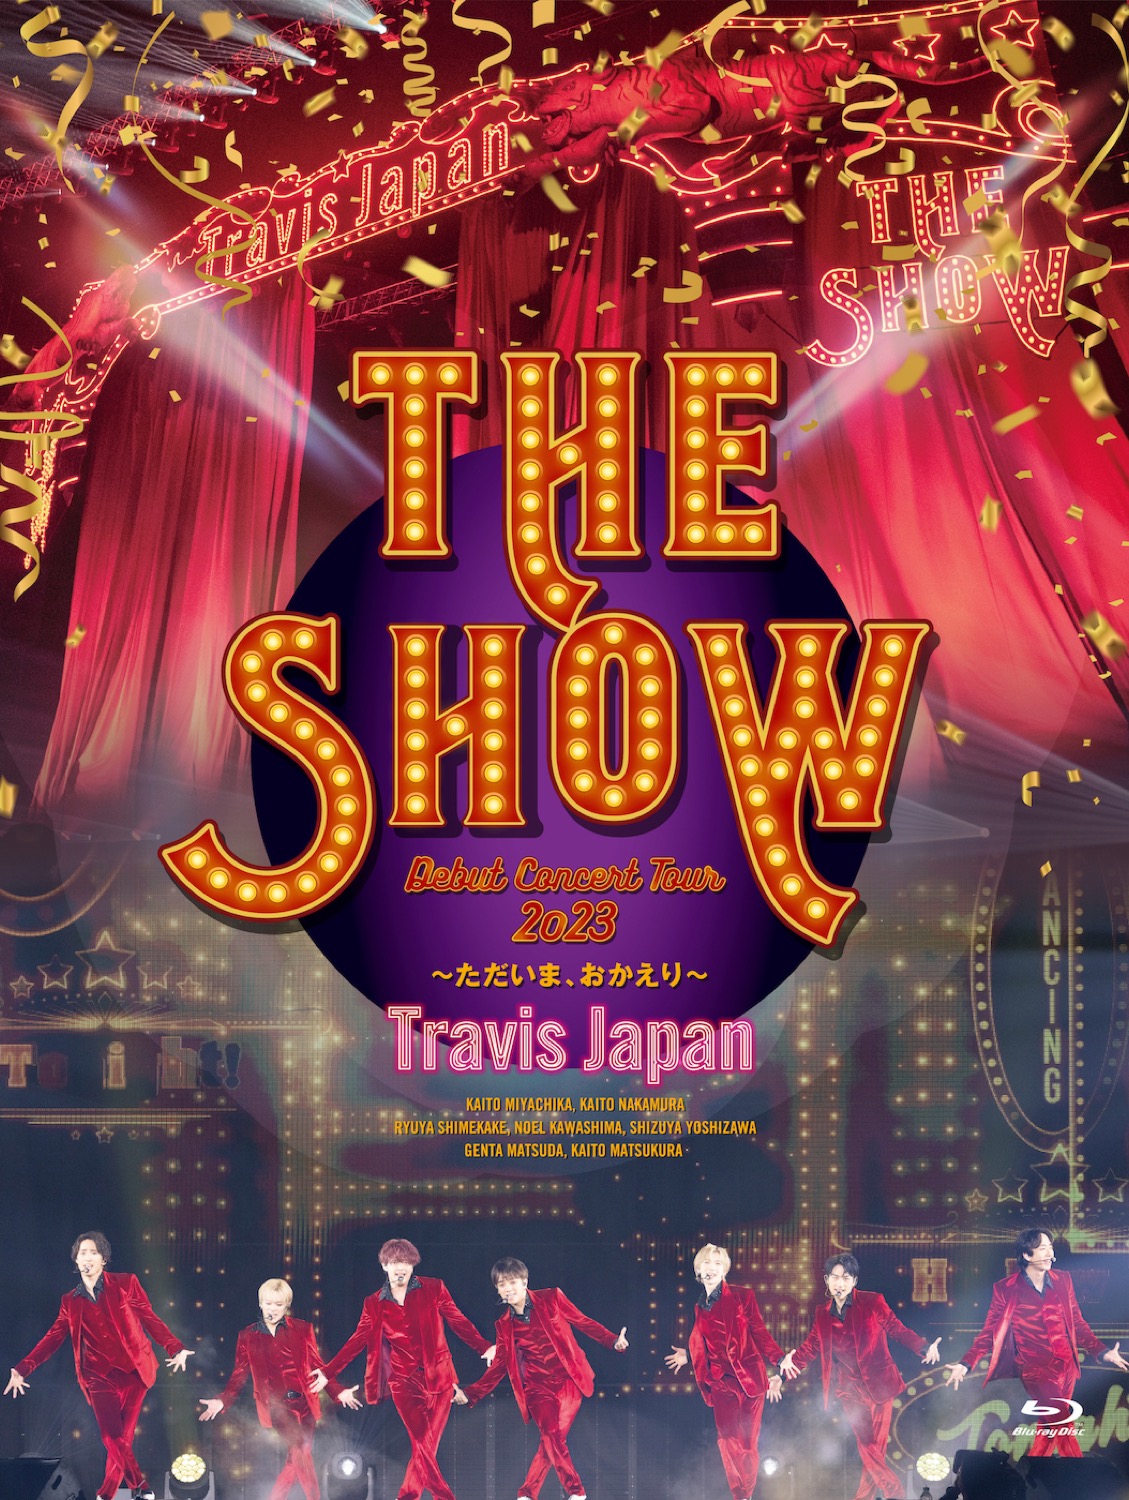 Travis Japan、デビューコンサート映像商品から特典映像ダイジェストを ...